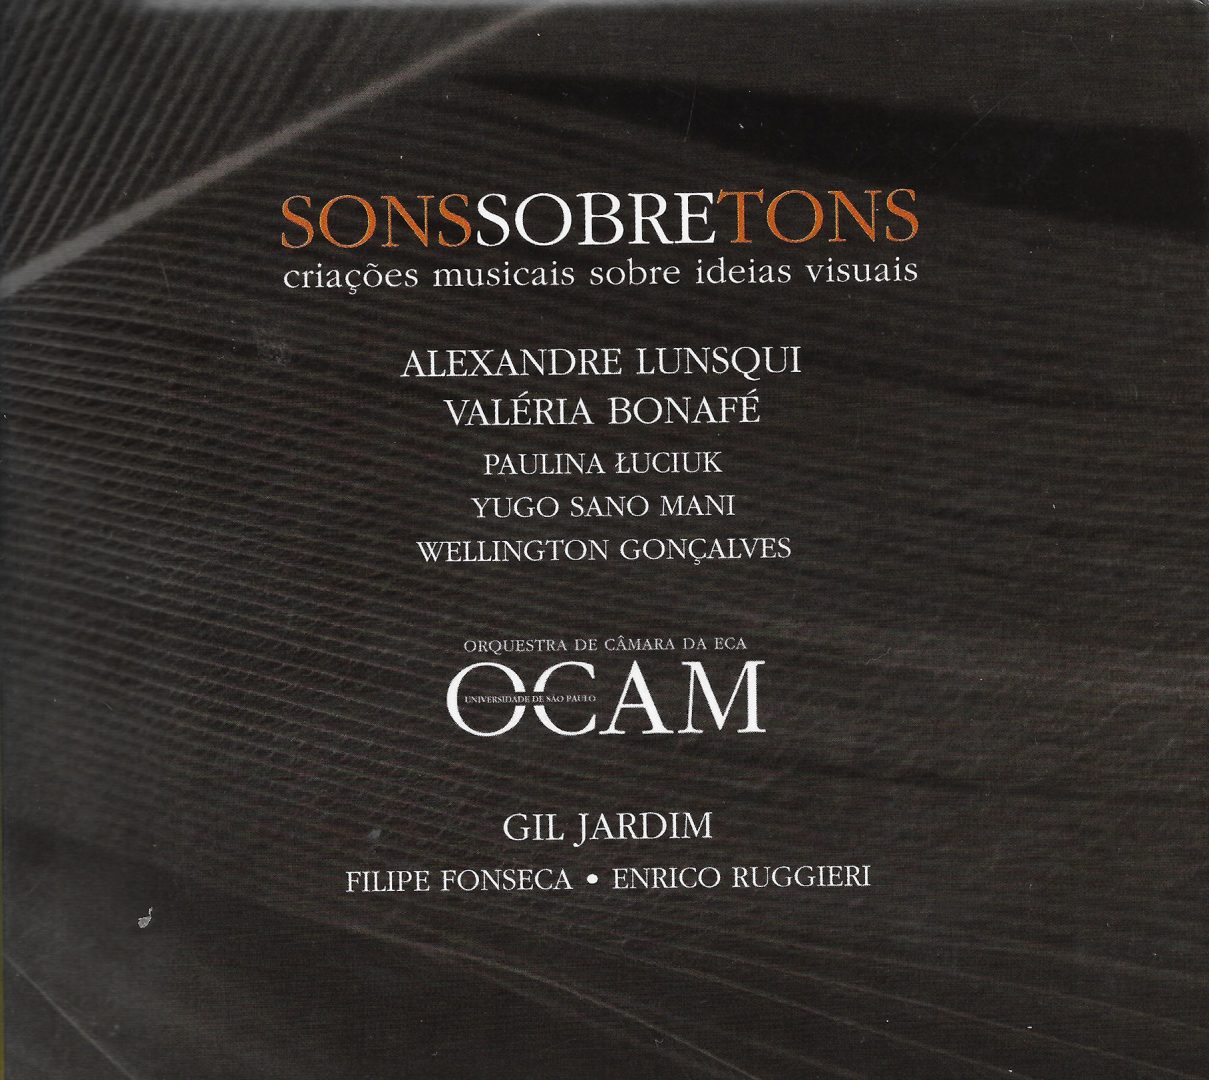 Capa CD Orquestra OCAM 002 Sonorizando imagens